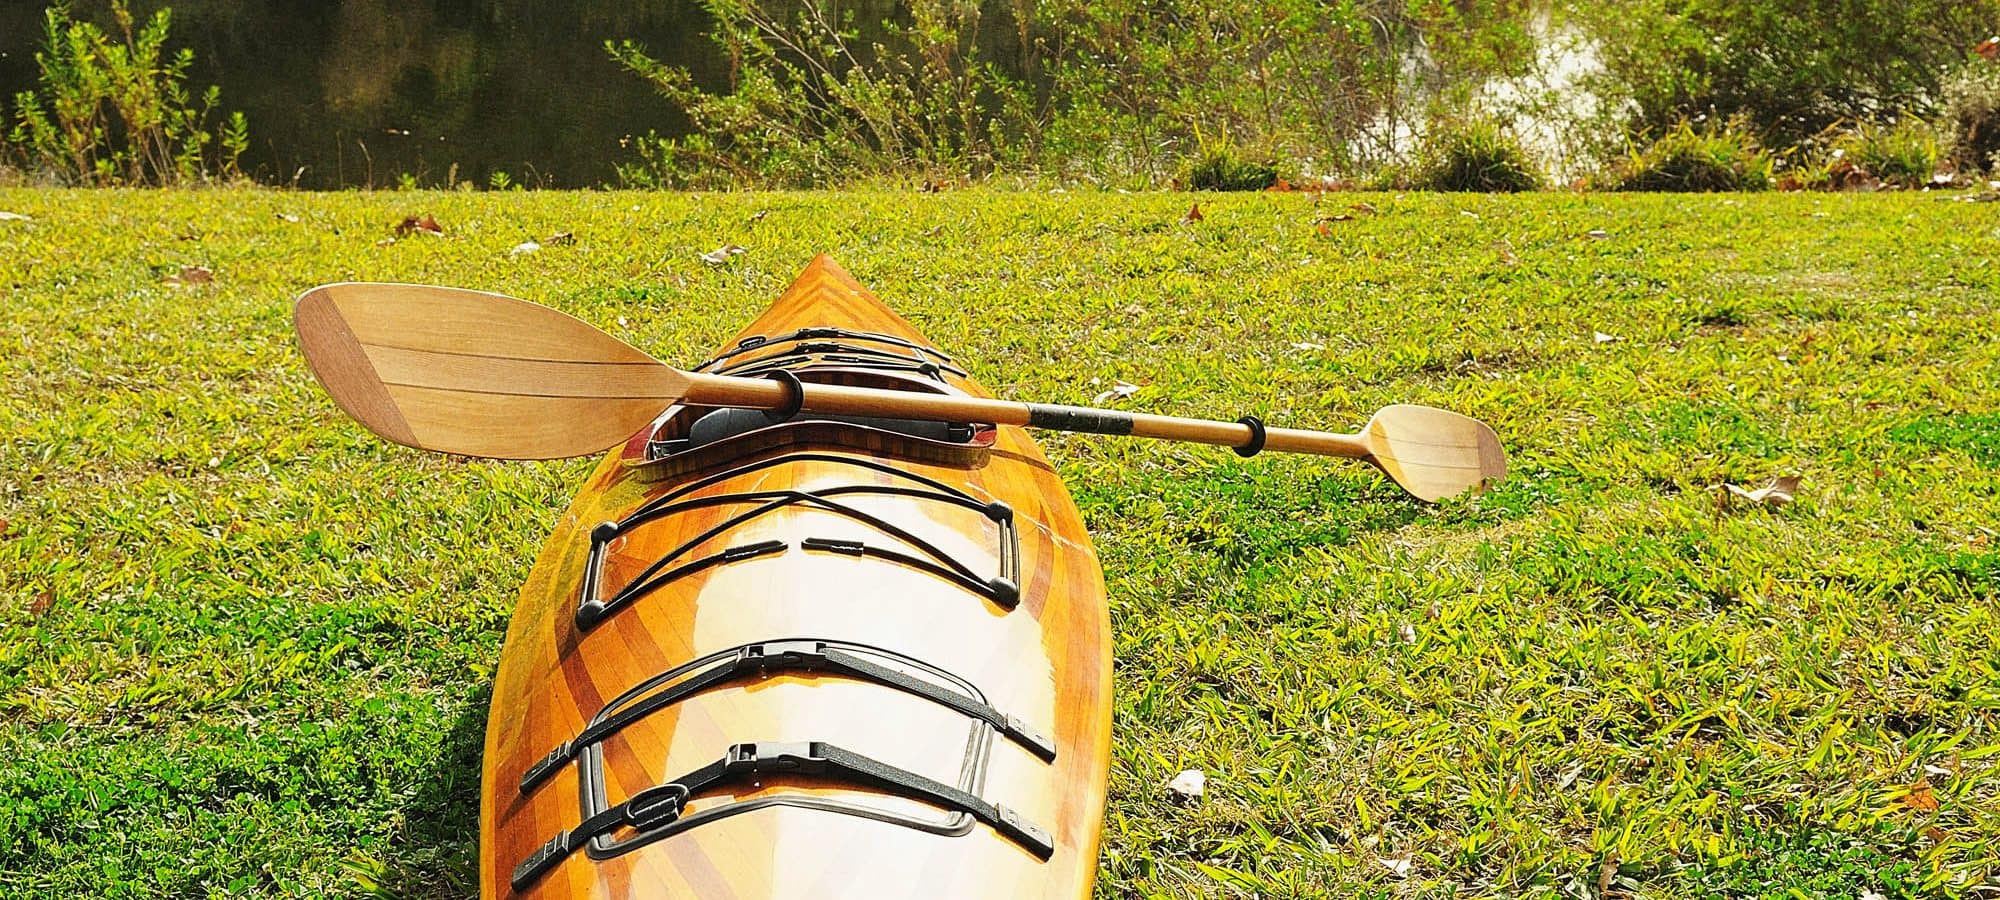 Salmon River wooden kayak closeup Otis Oregon